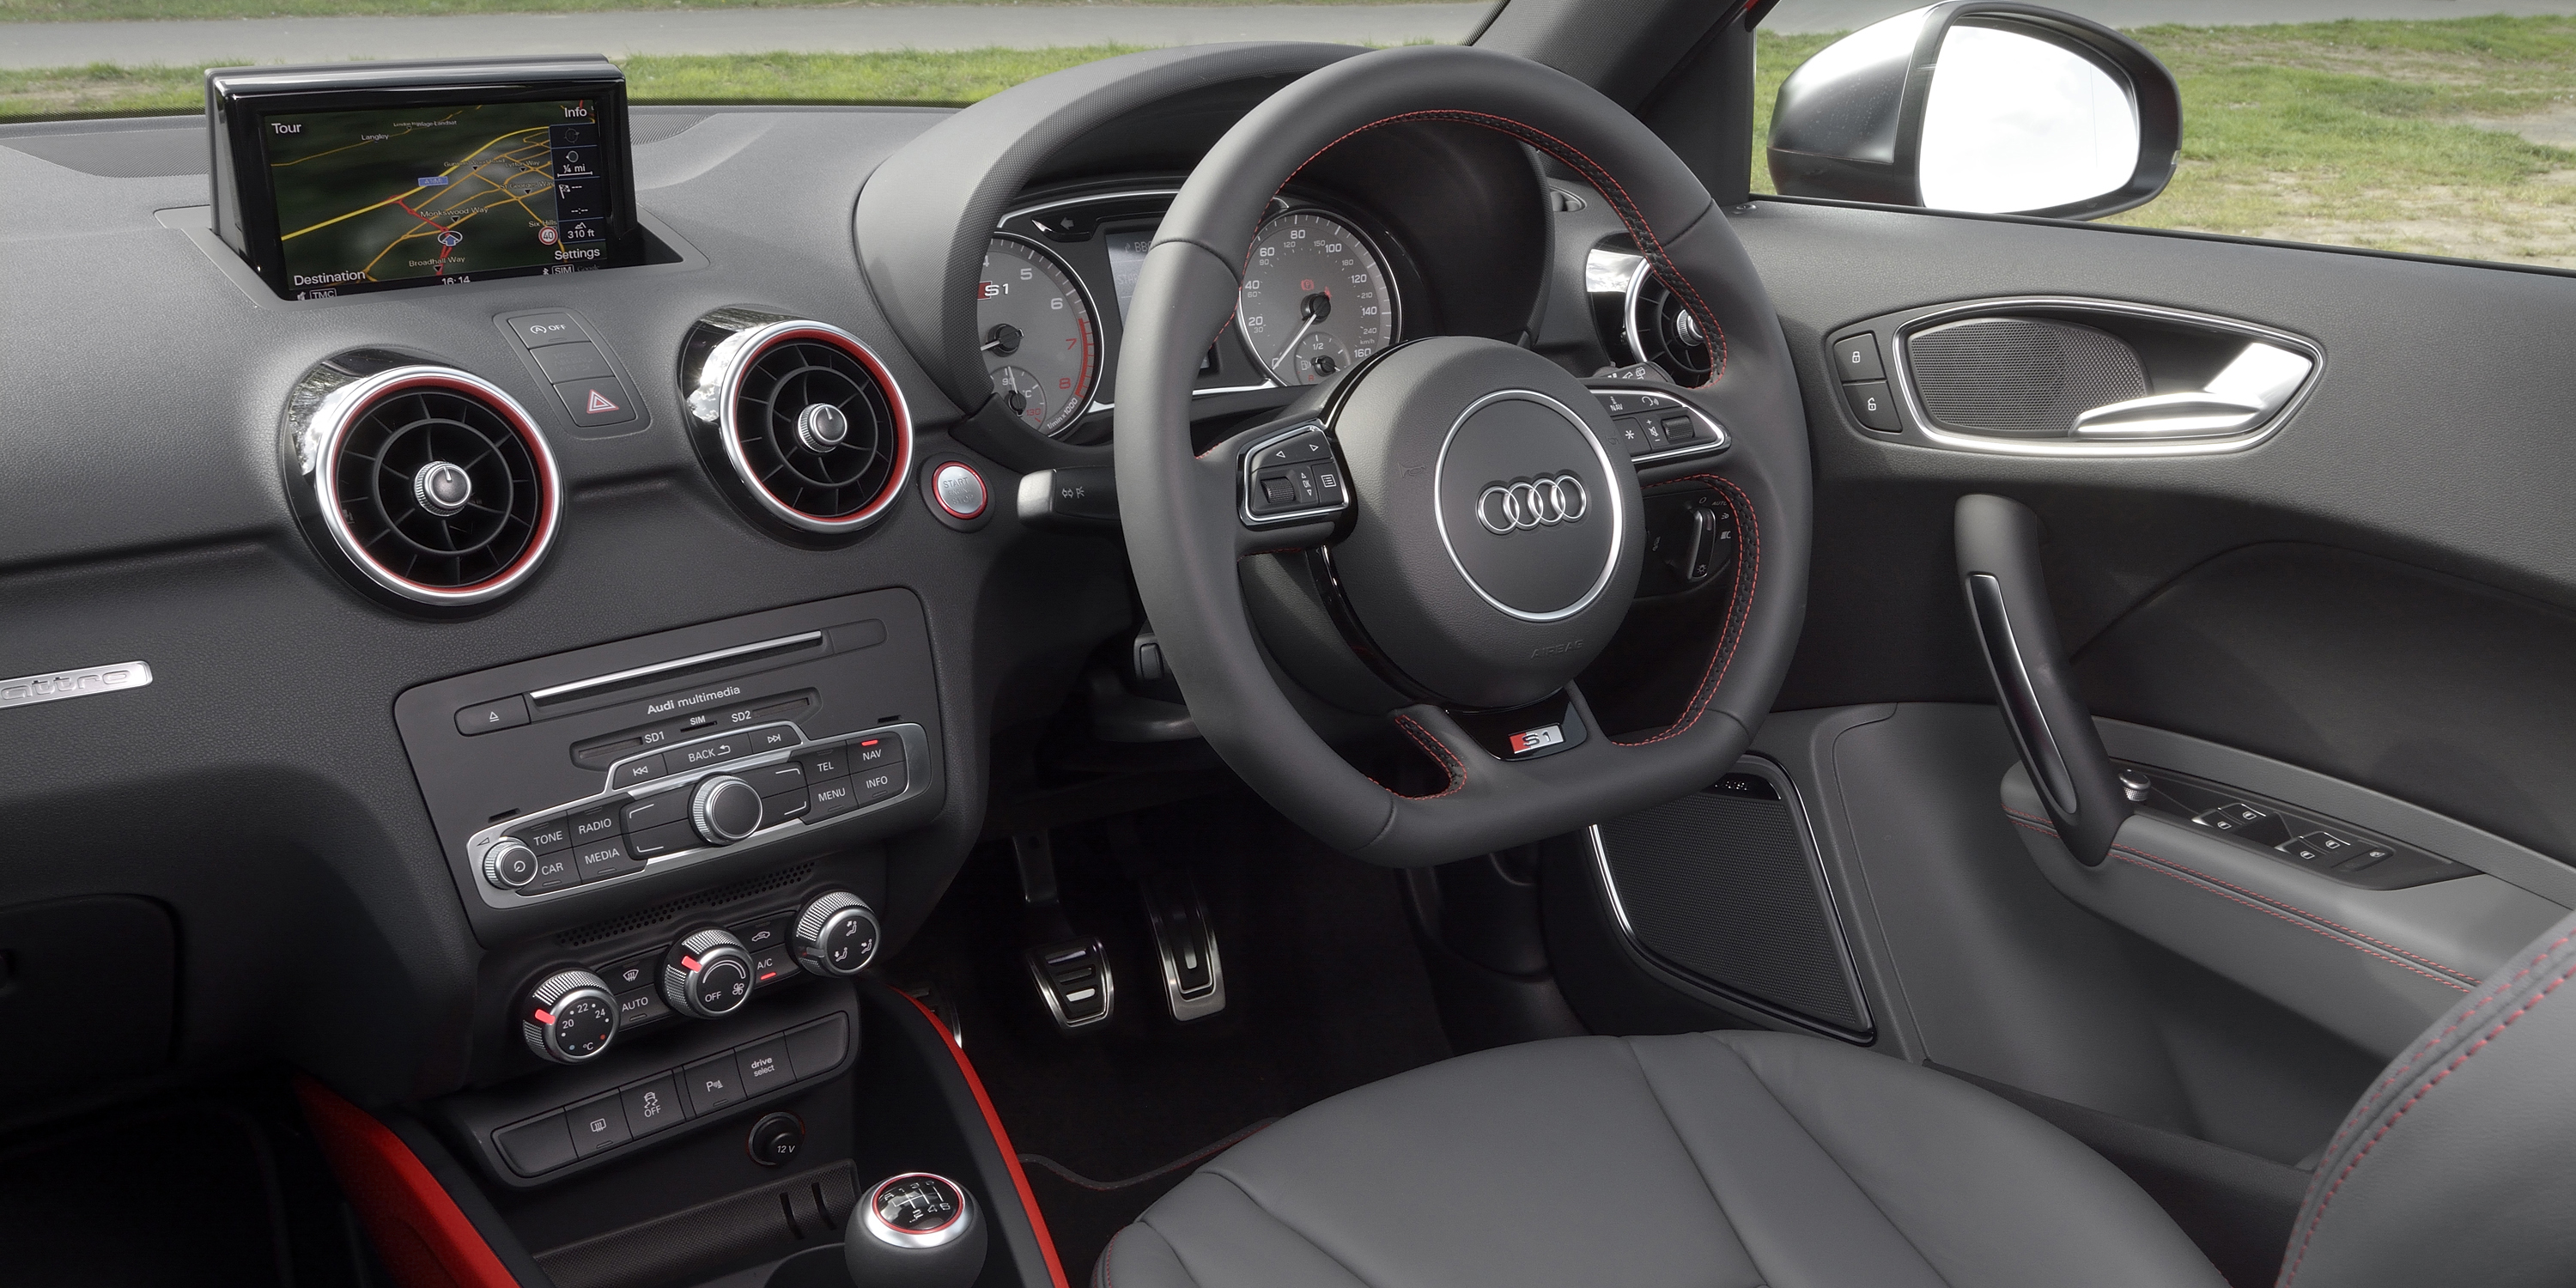 https://carwow-uk-wp-3.imgix.net/Audi-S1-Interior-1.jpg